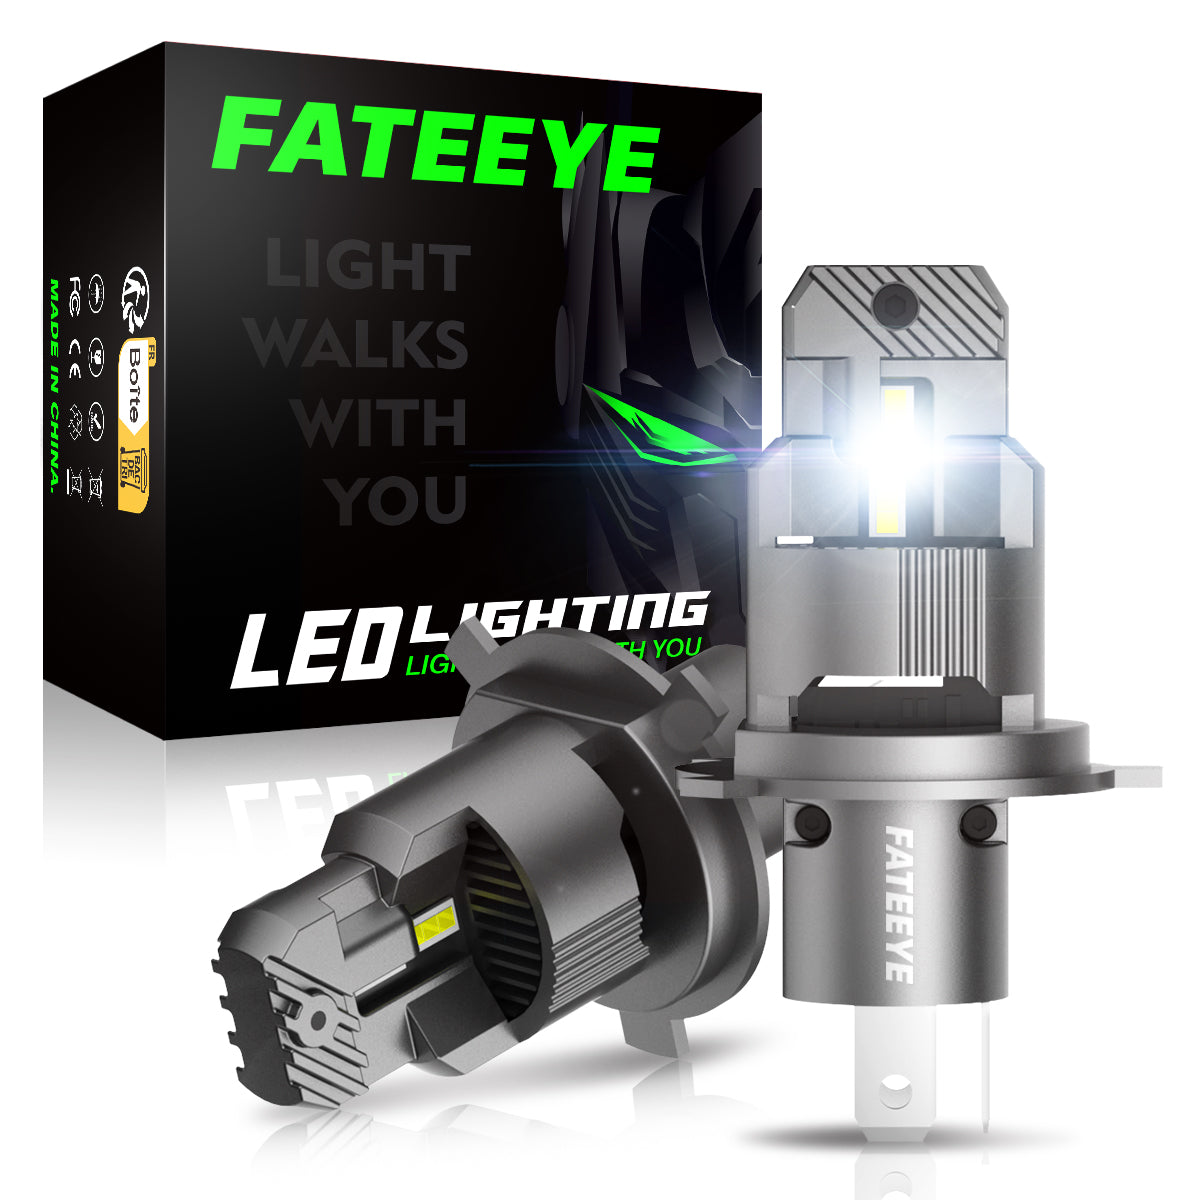 Automotive LED Headlights  Super Bright H4 LED Vehicle Lights